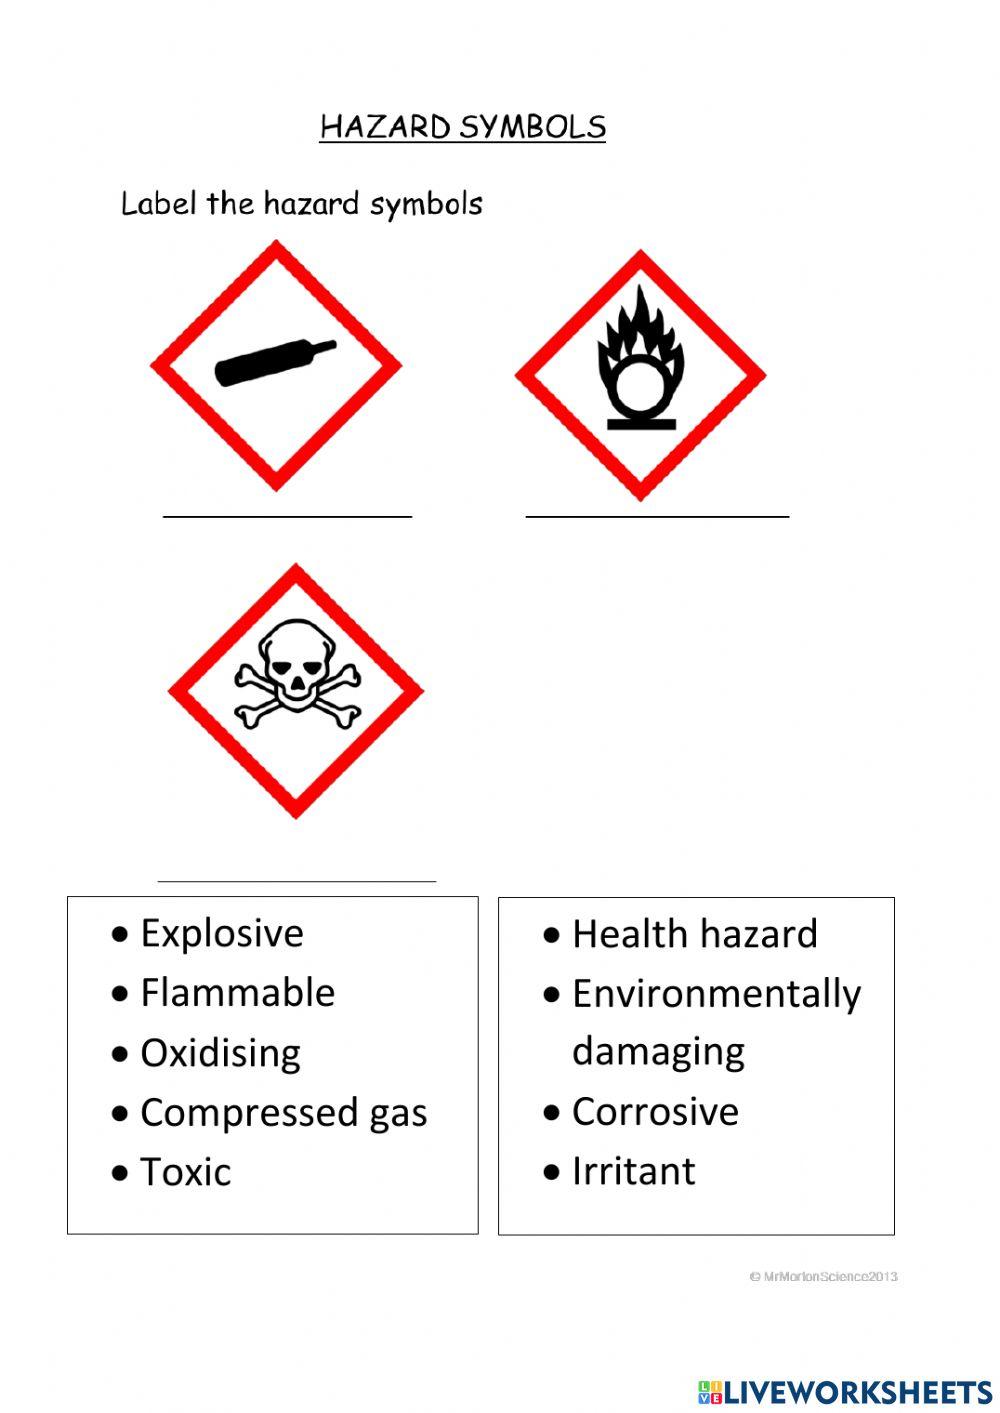 Hazard symbols